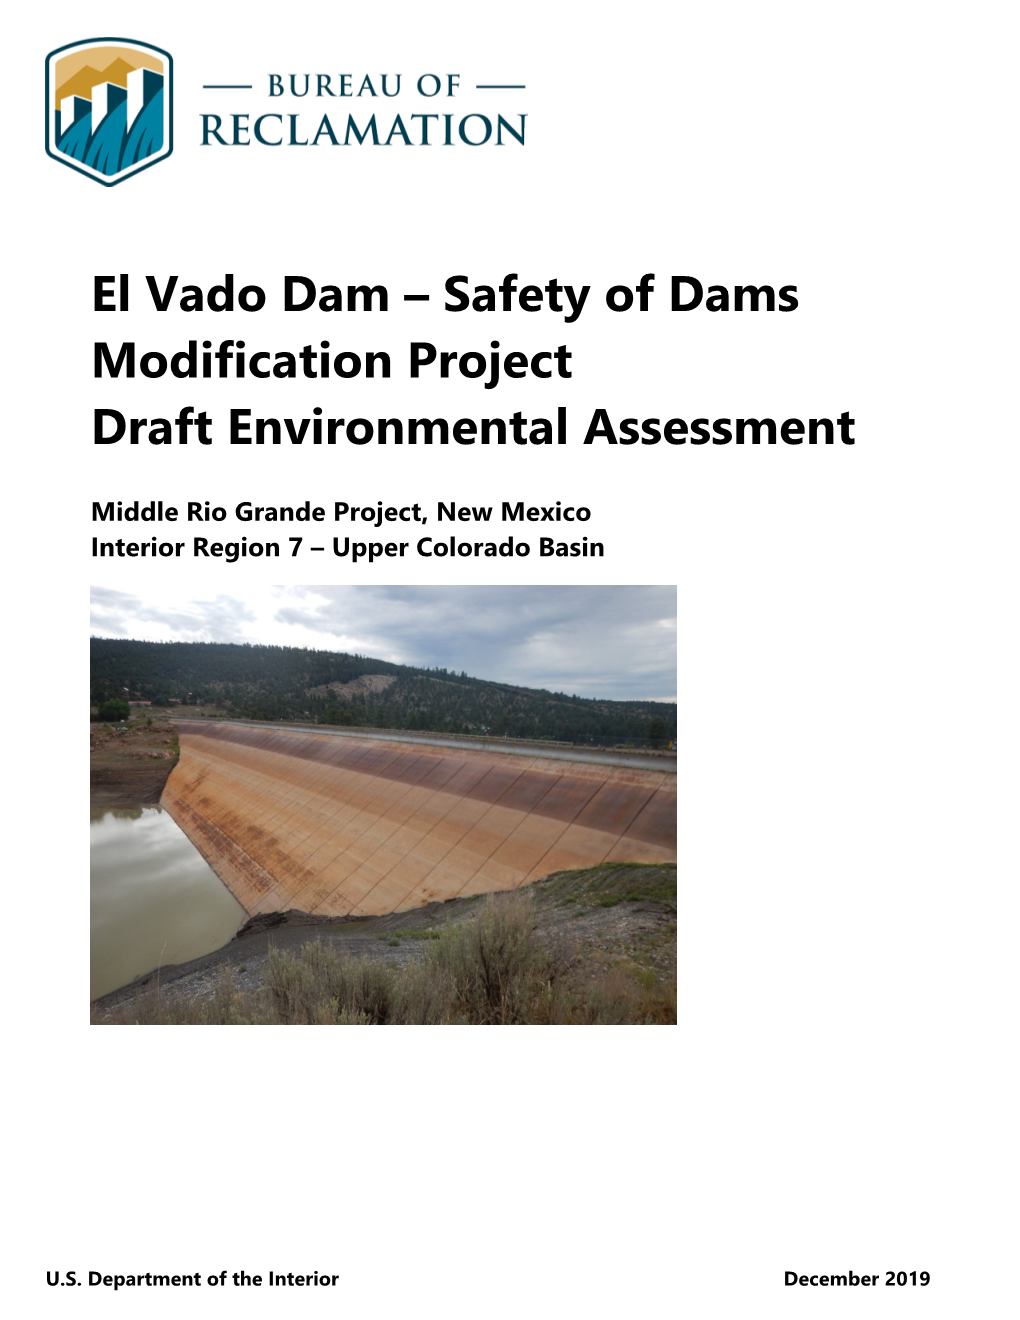 El Vado Dam Safety of Dams Modification Project Draft Environmental Assessment